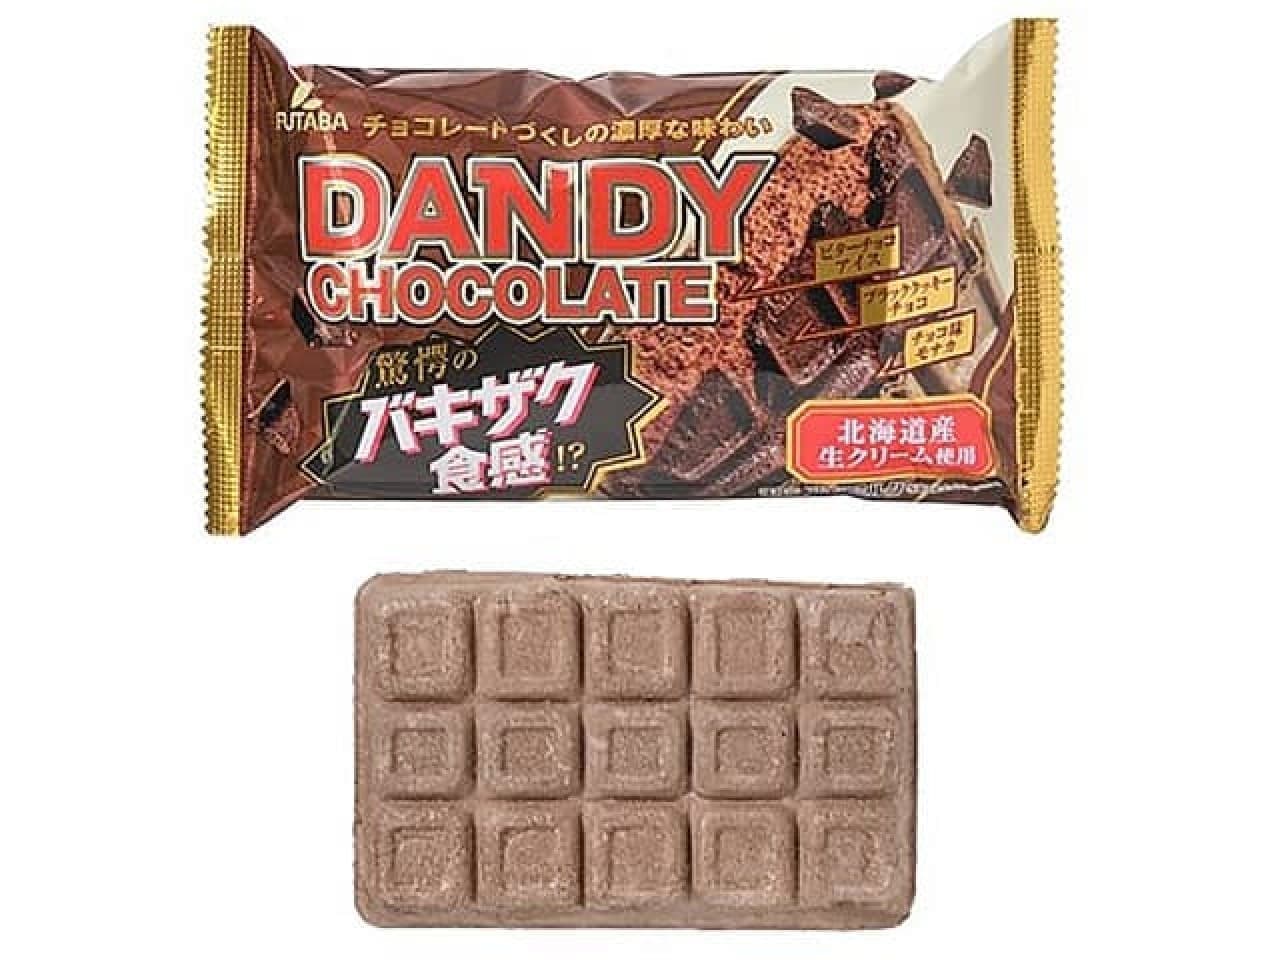 7-Eleven "Futaba Dandy Chocolate".